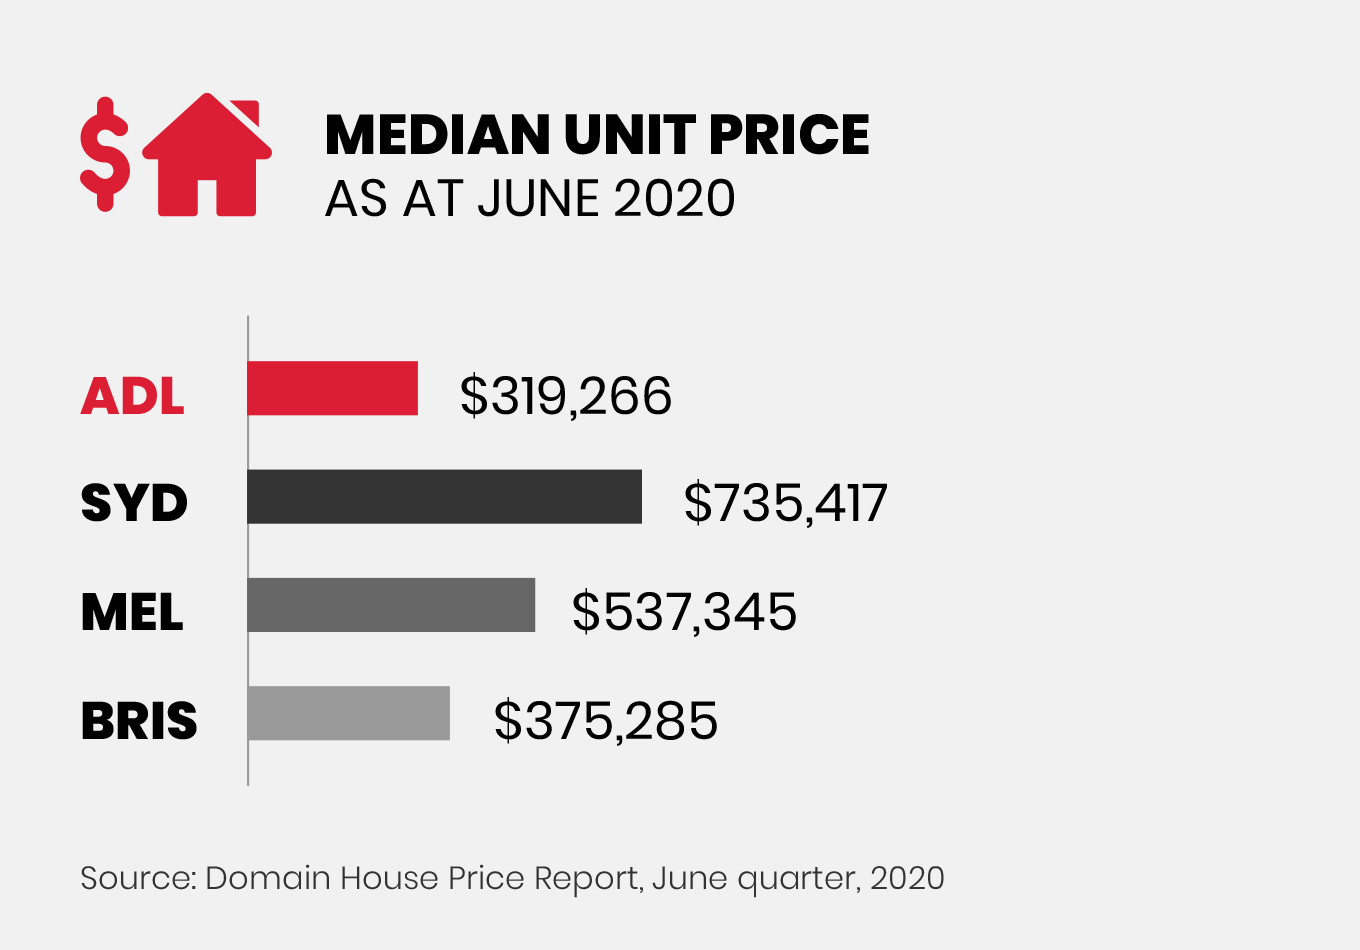 Adelaide Median Unit Price Comparison